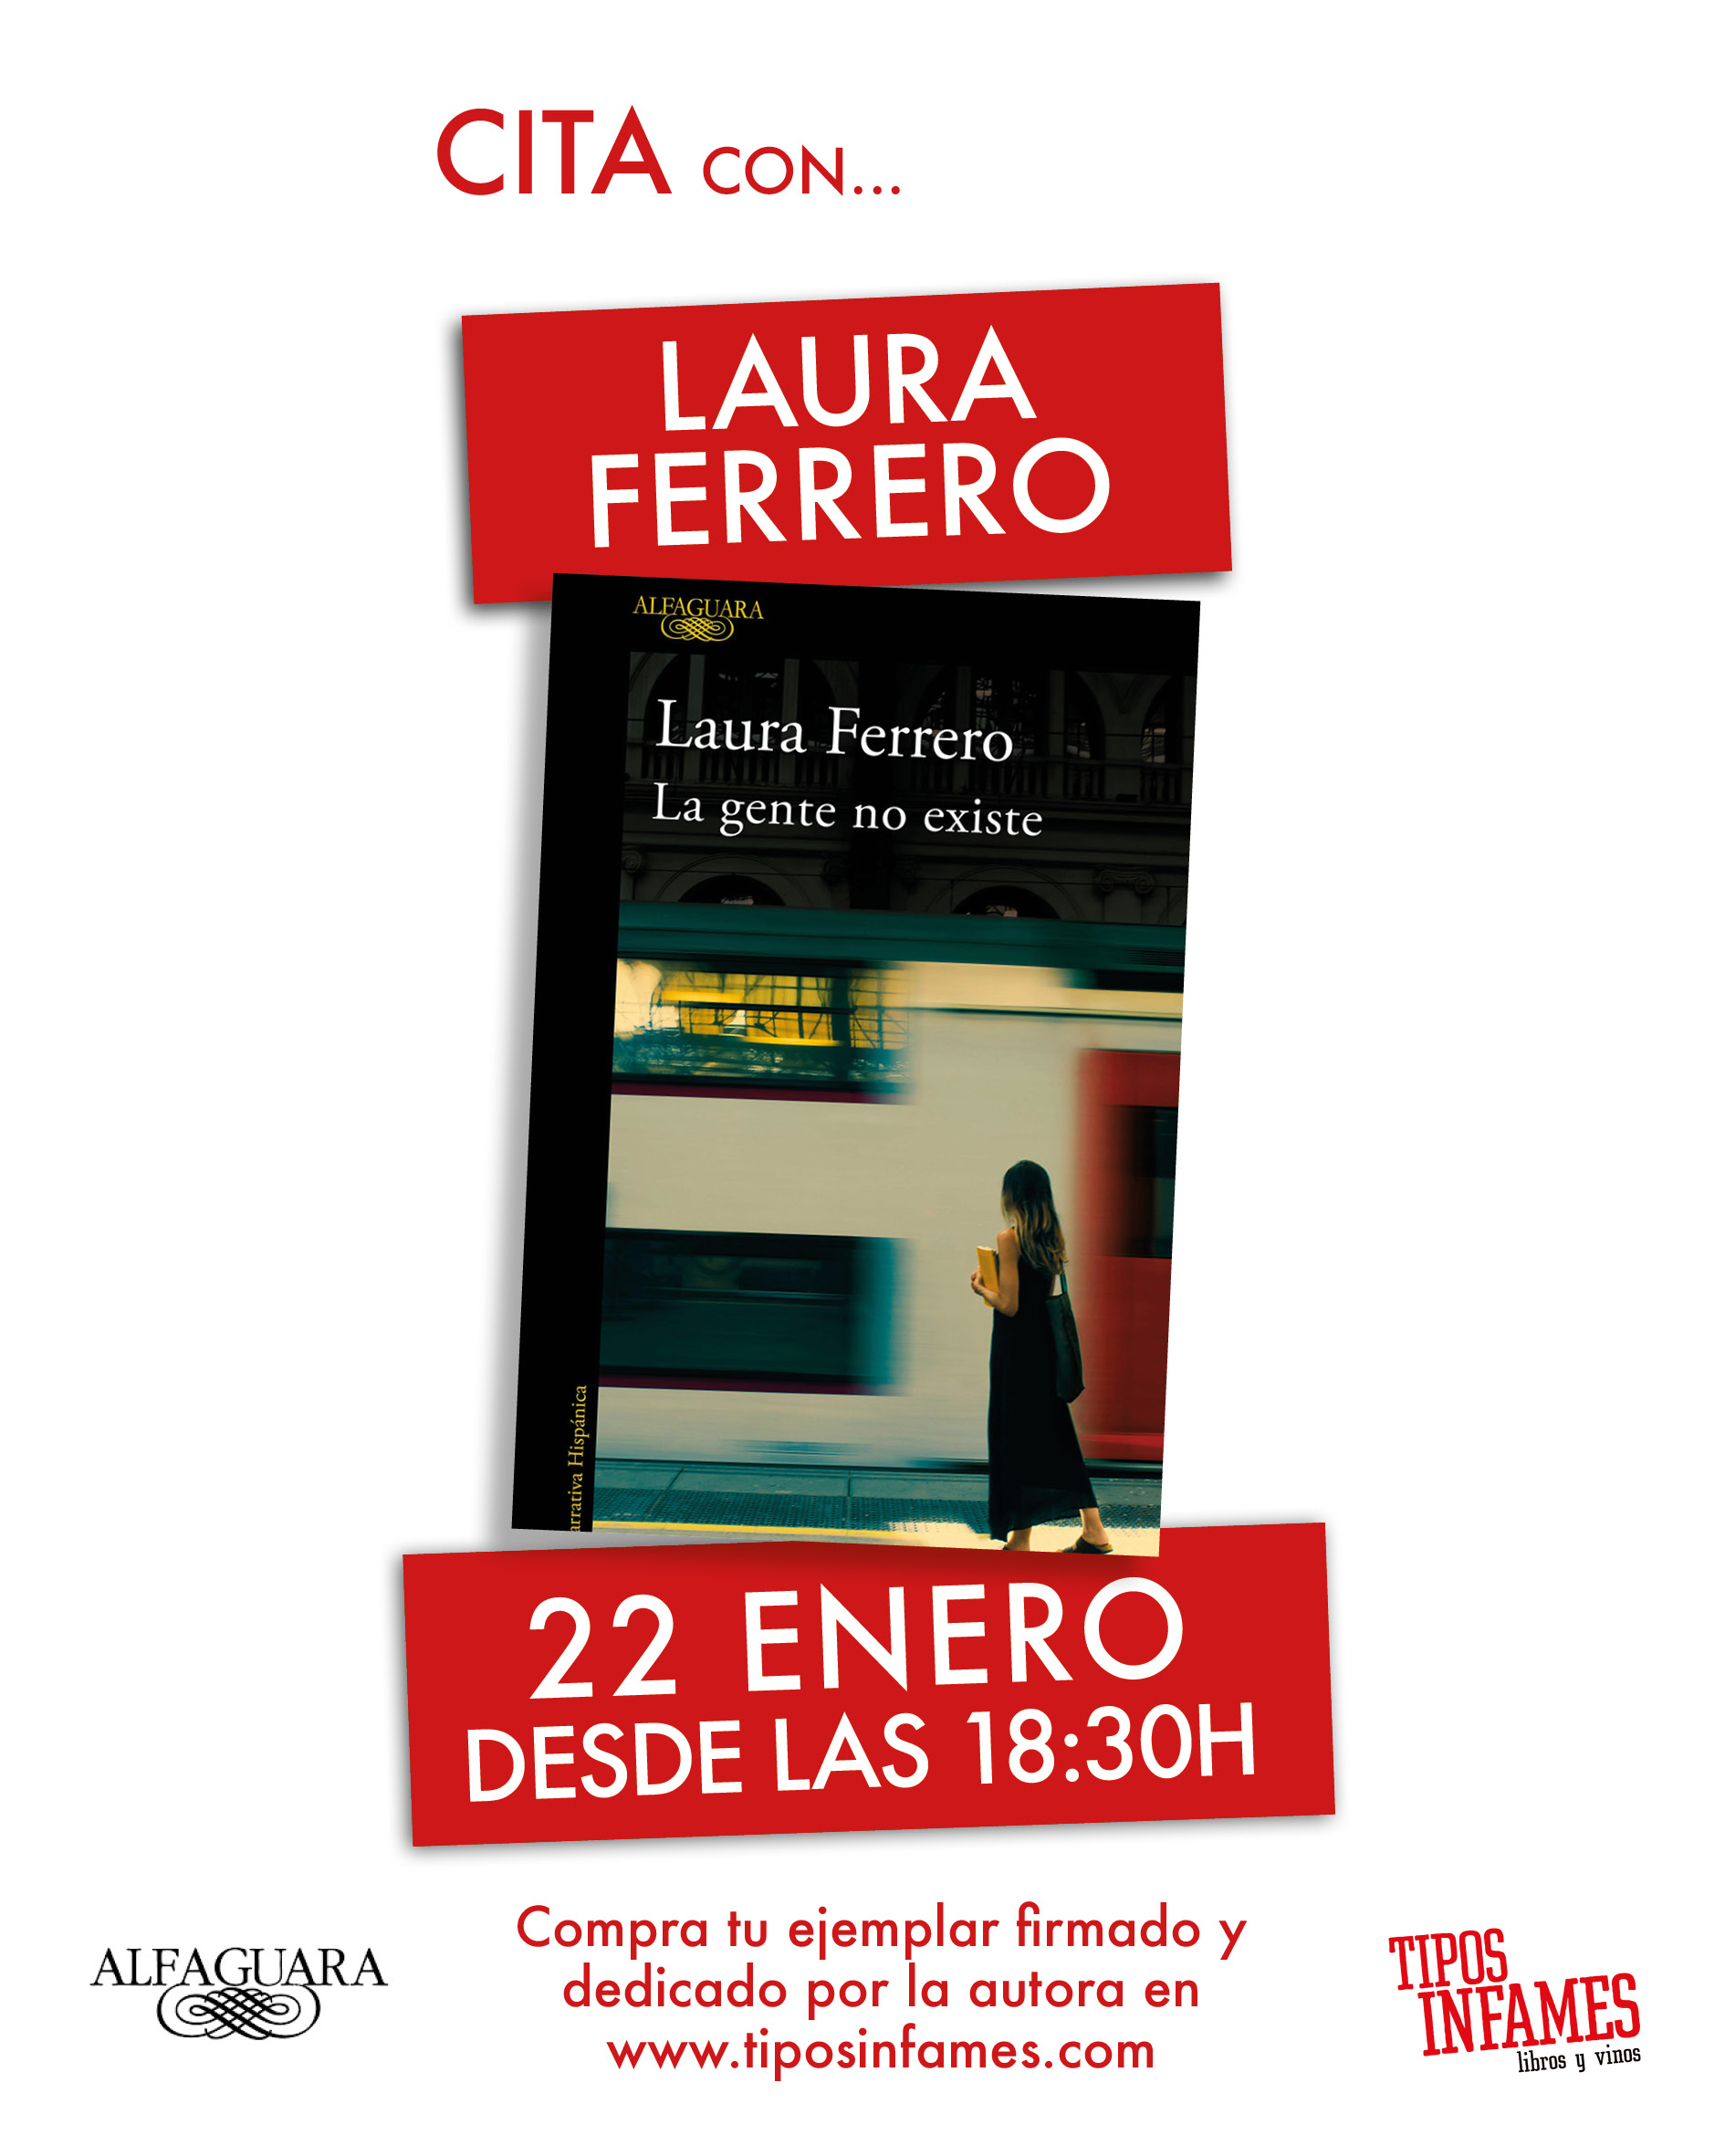 Cita con... Laura Ferrero